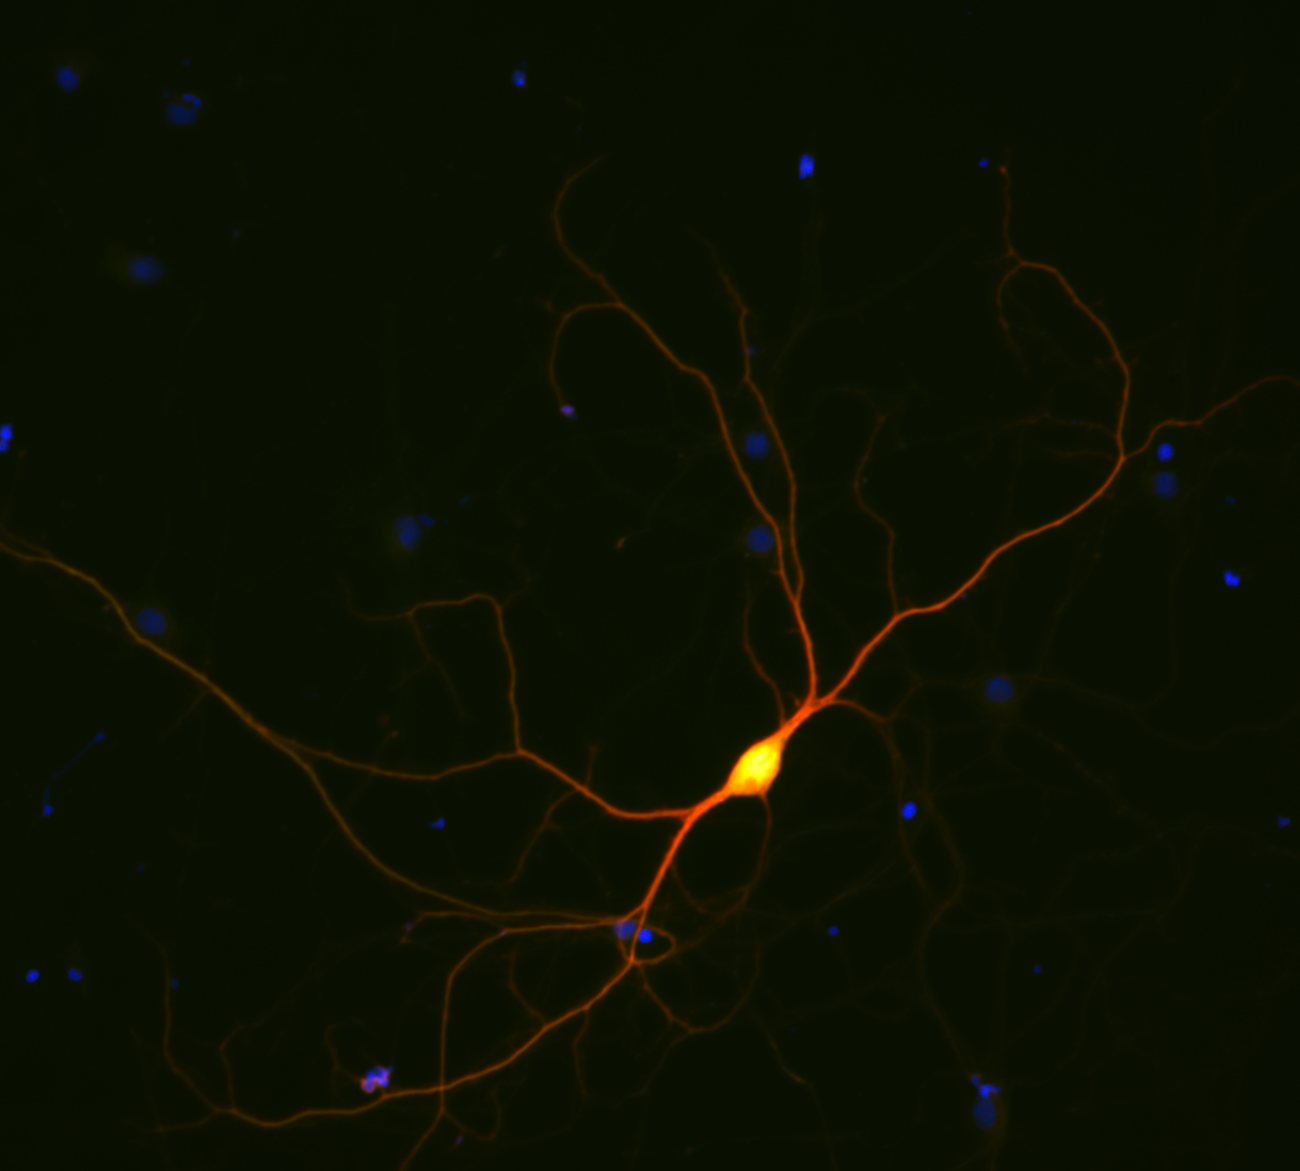 Enzymes in neurons, which look like lightening in a dark sky